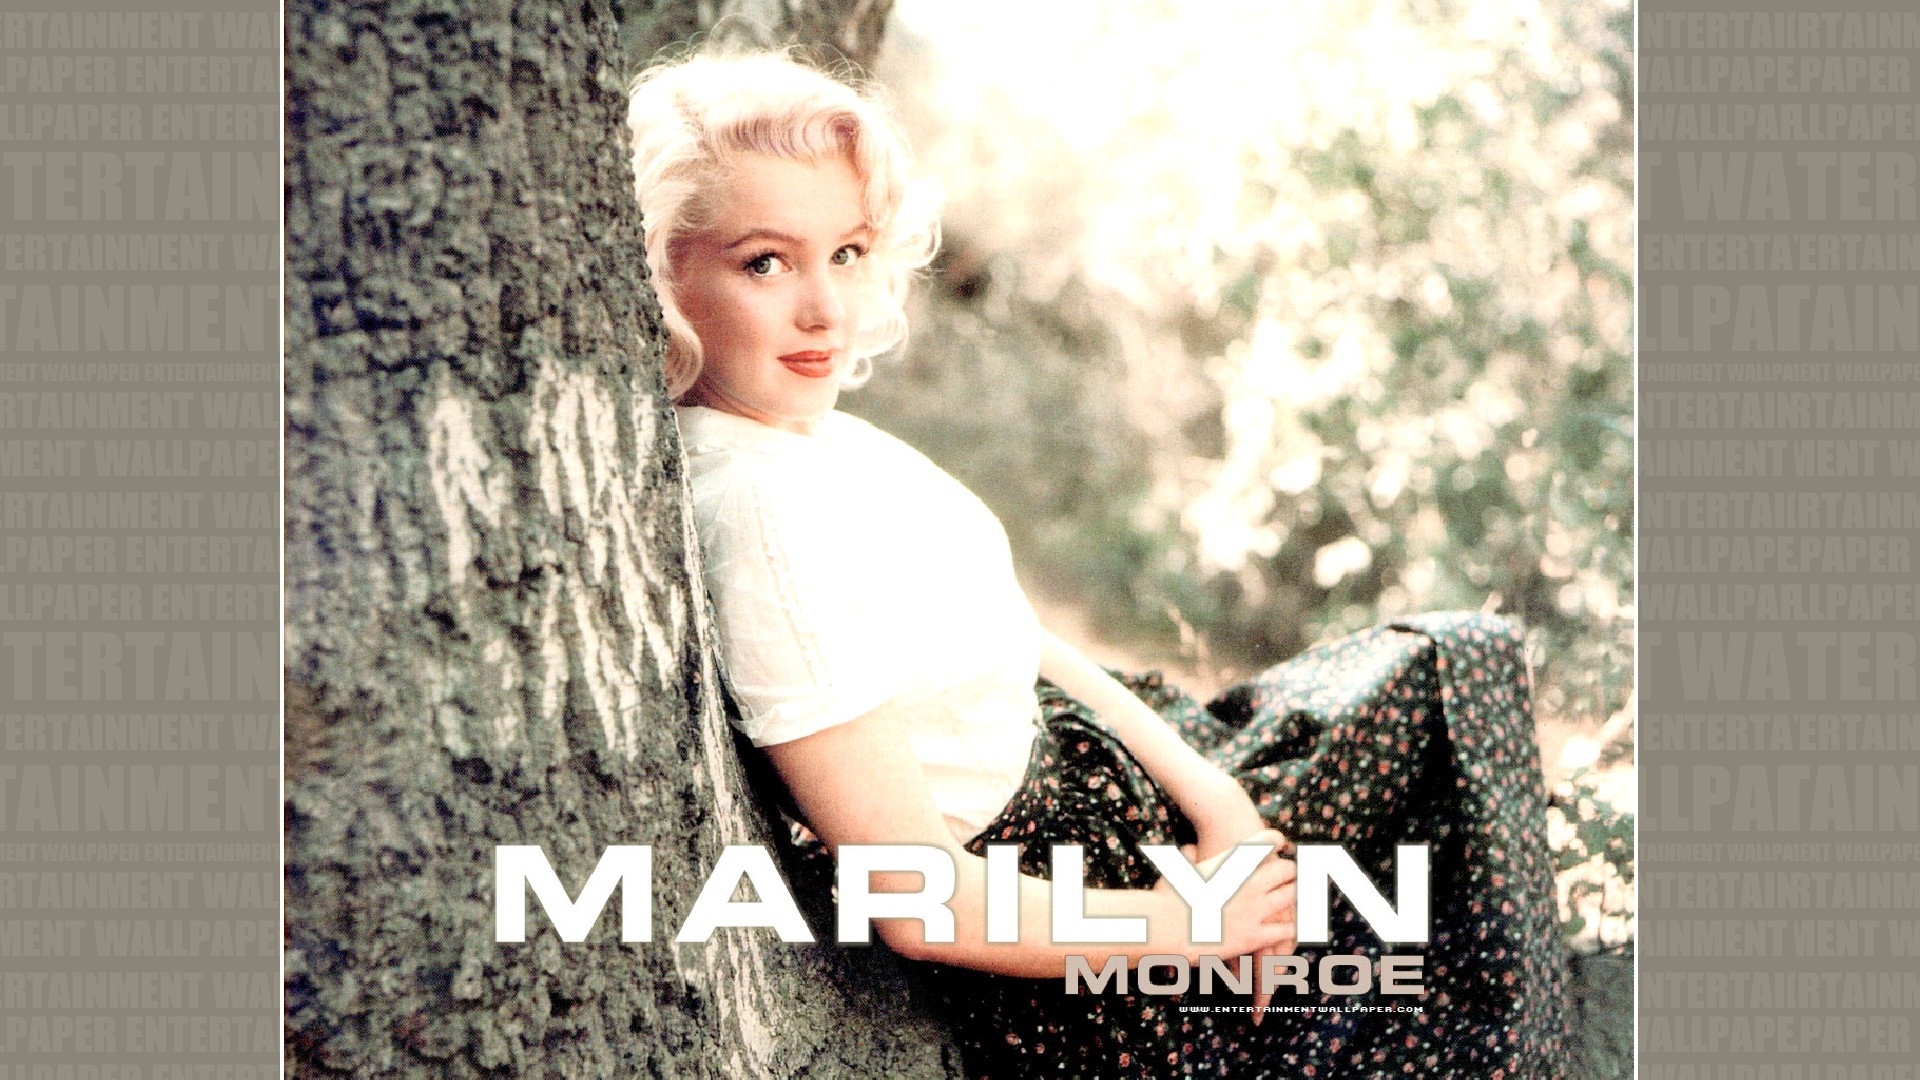 1920x1080 Marilyn Monroe Wallpaper - Original size, download now.